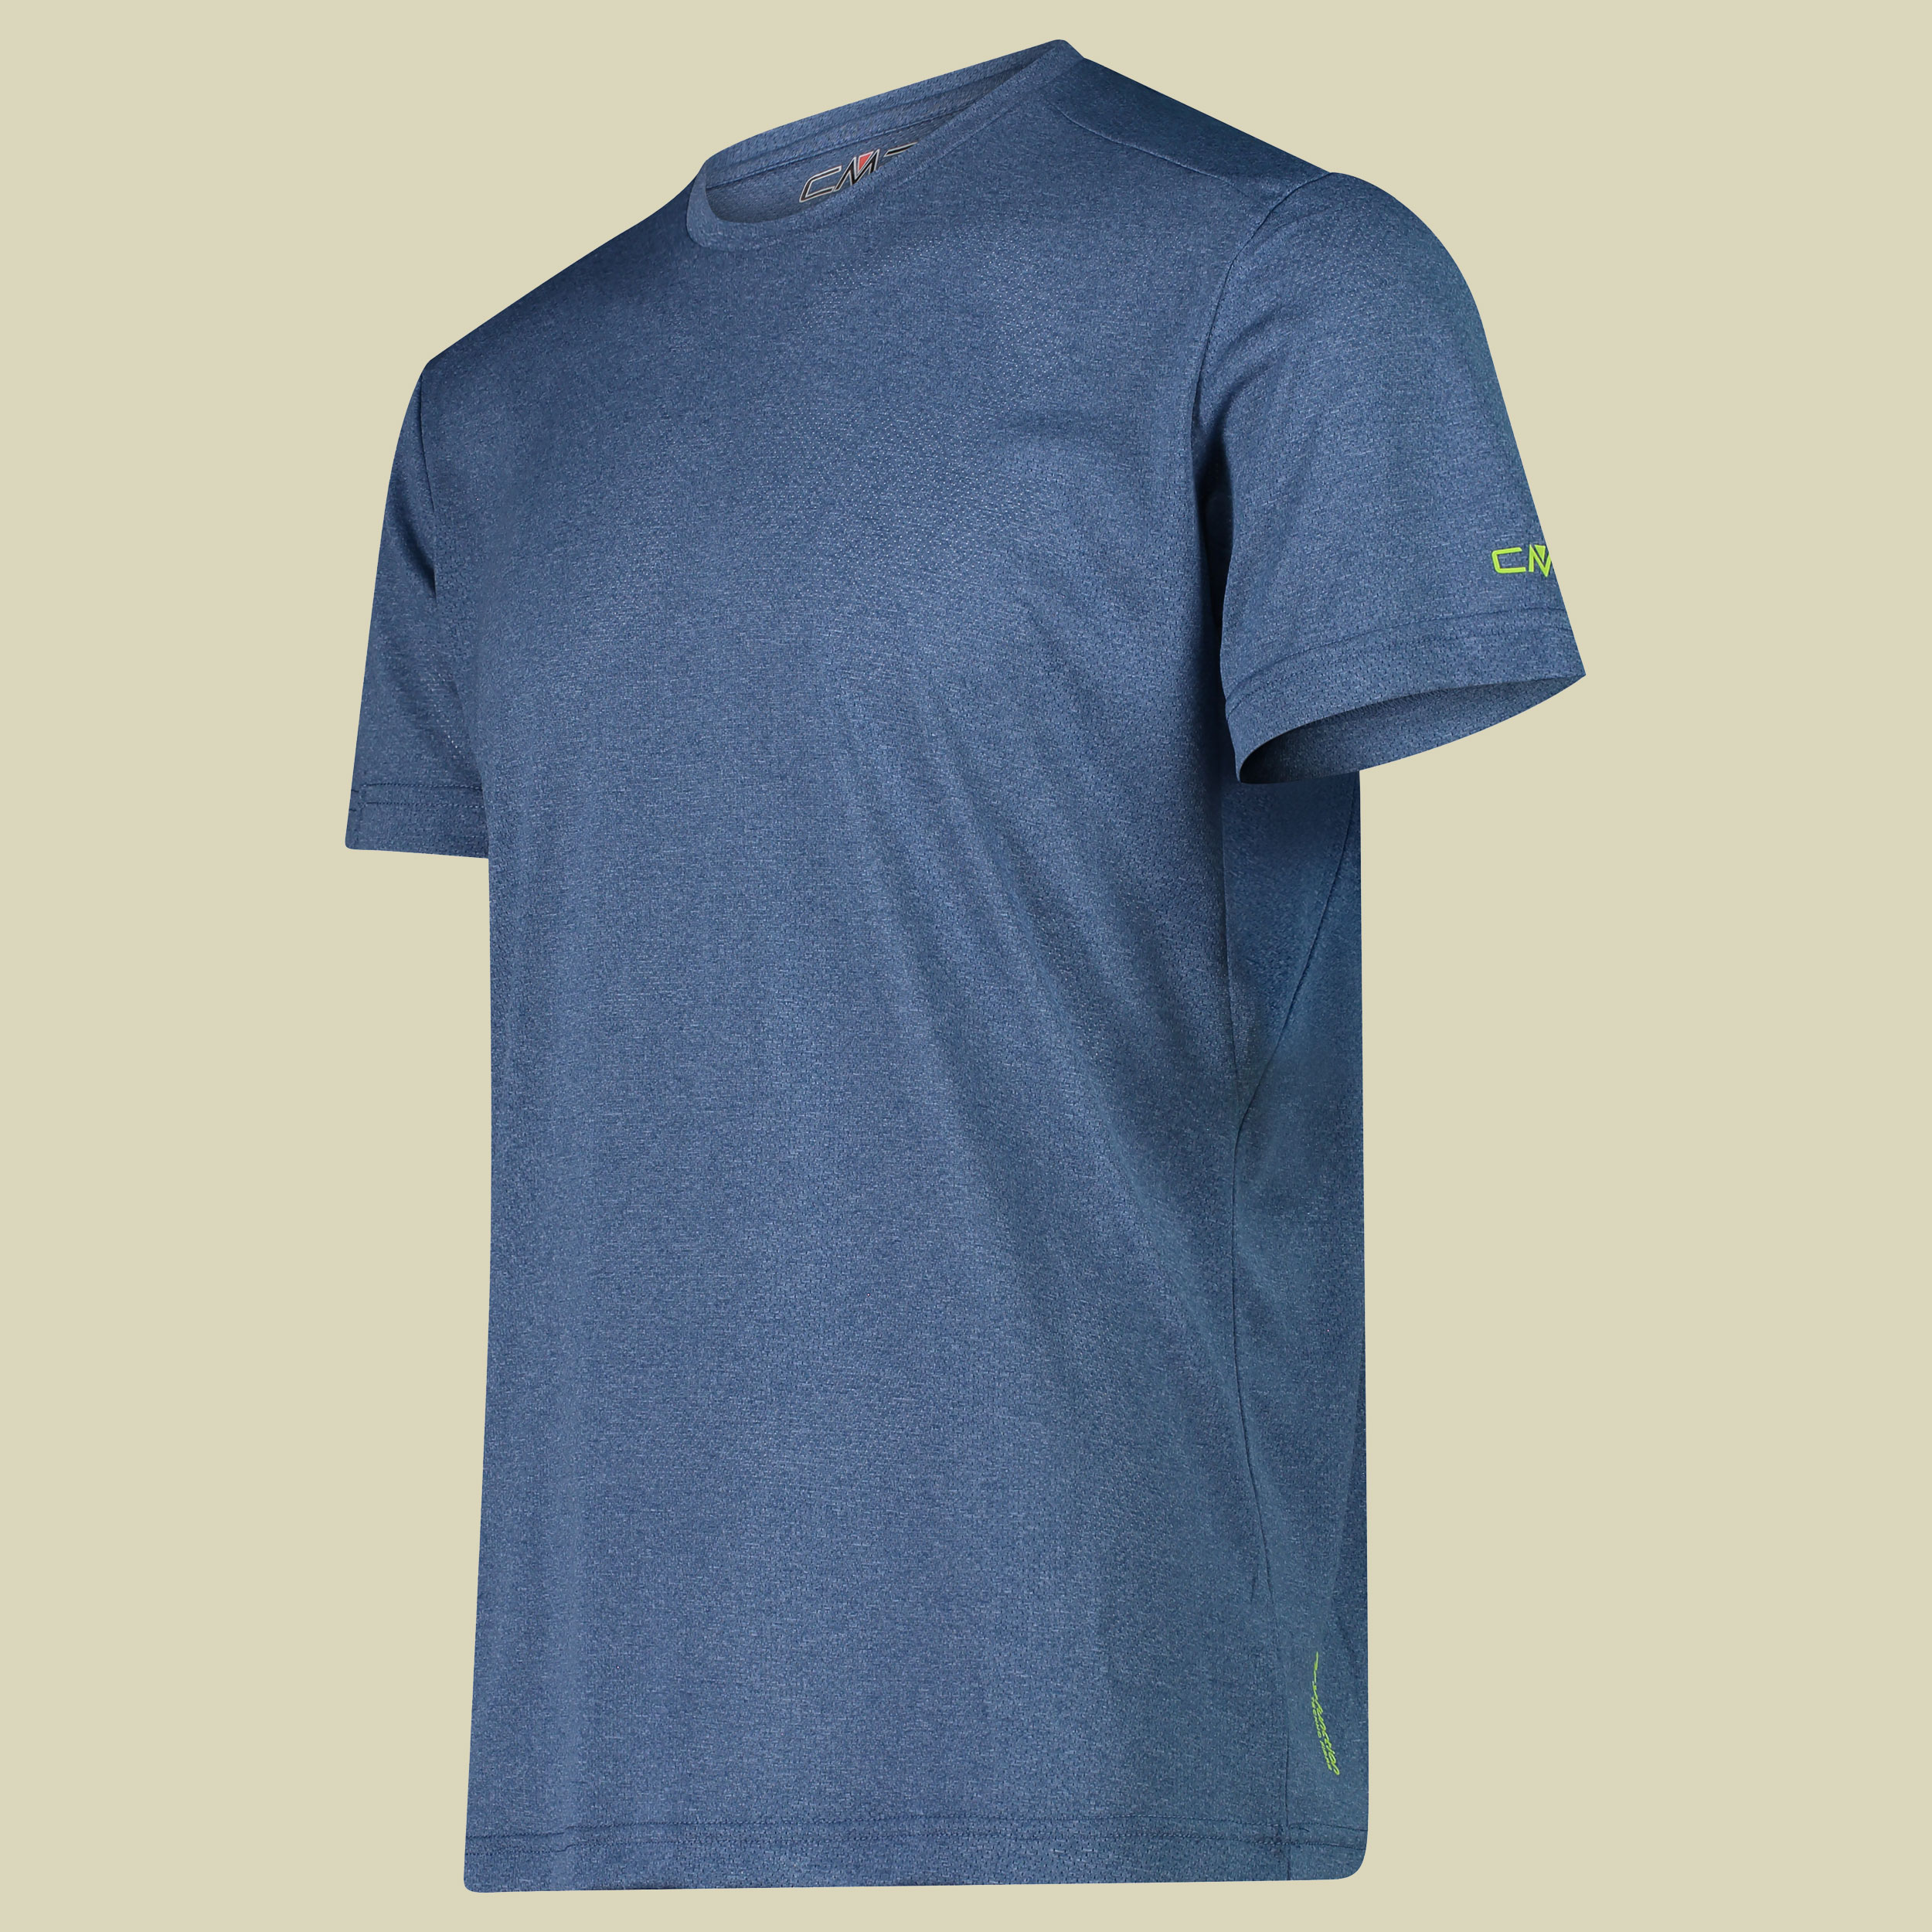 Man T-Shirt 31T5847 Größe 52 Farbe M879 dusty blue